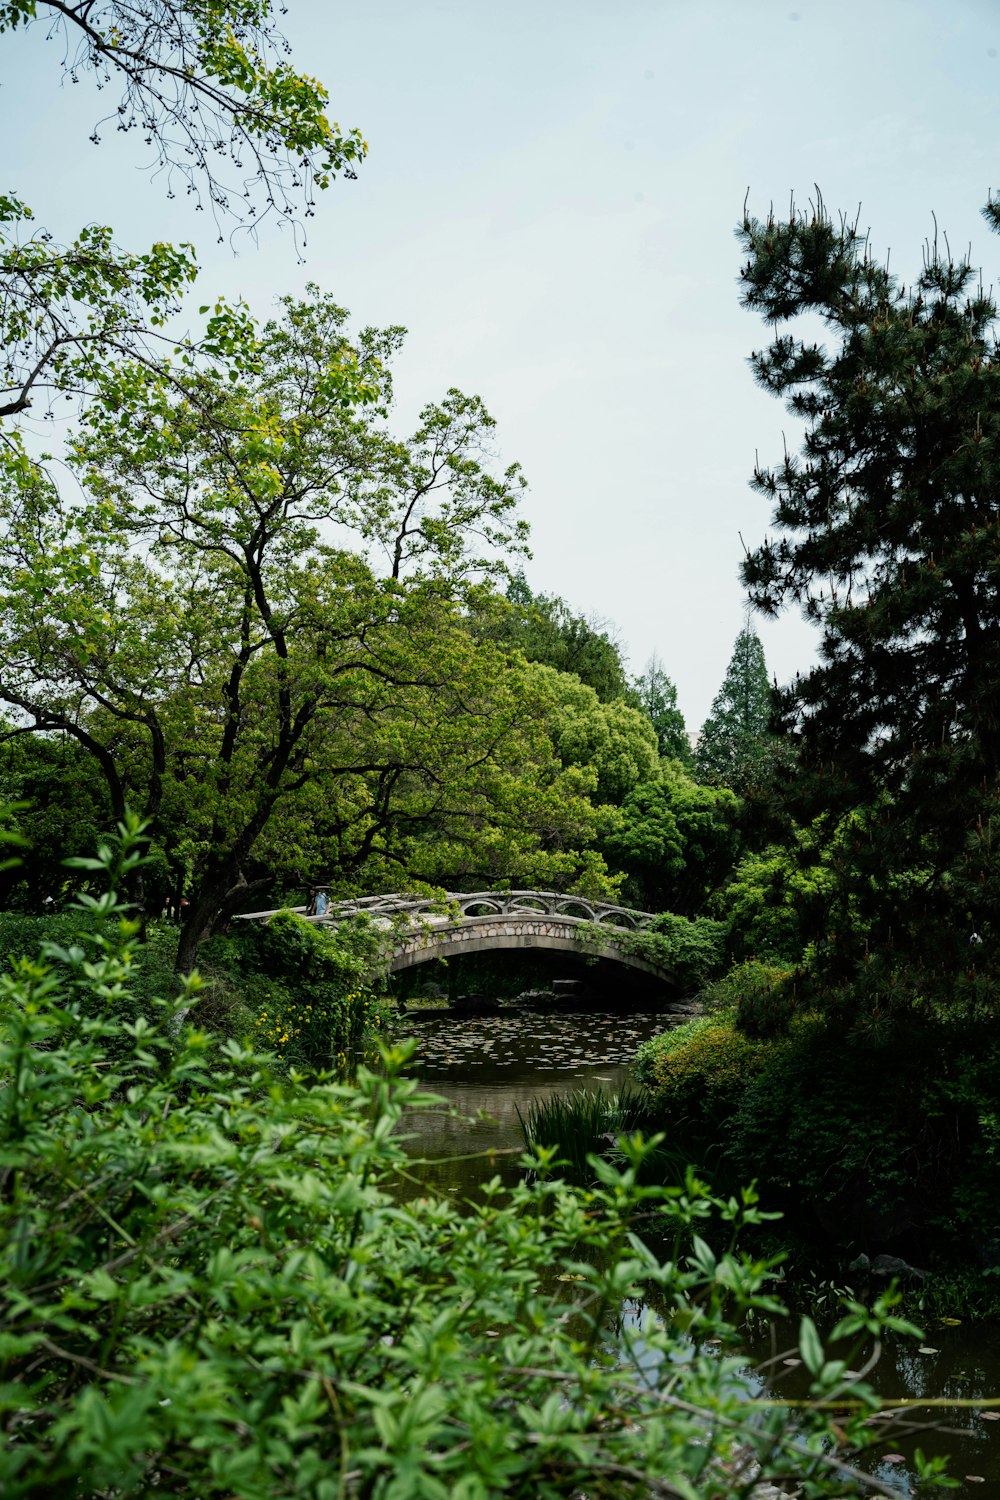 a stone bridge over a small stream in a forest